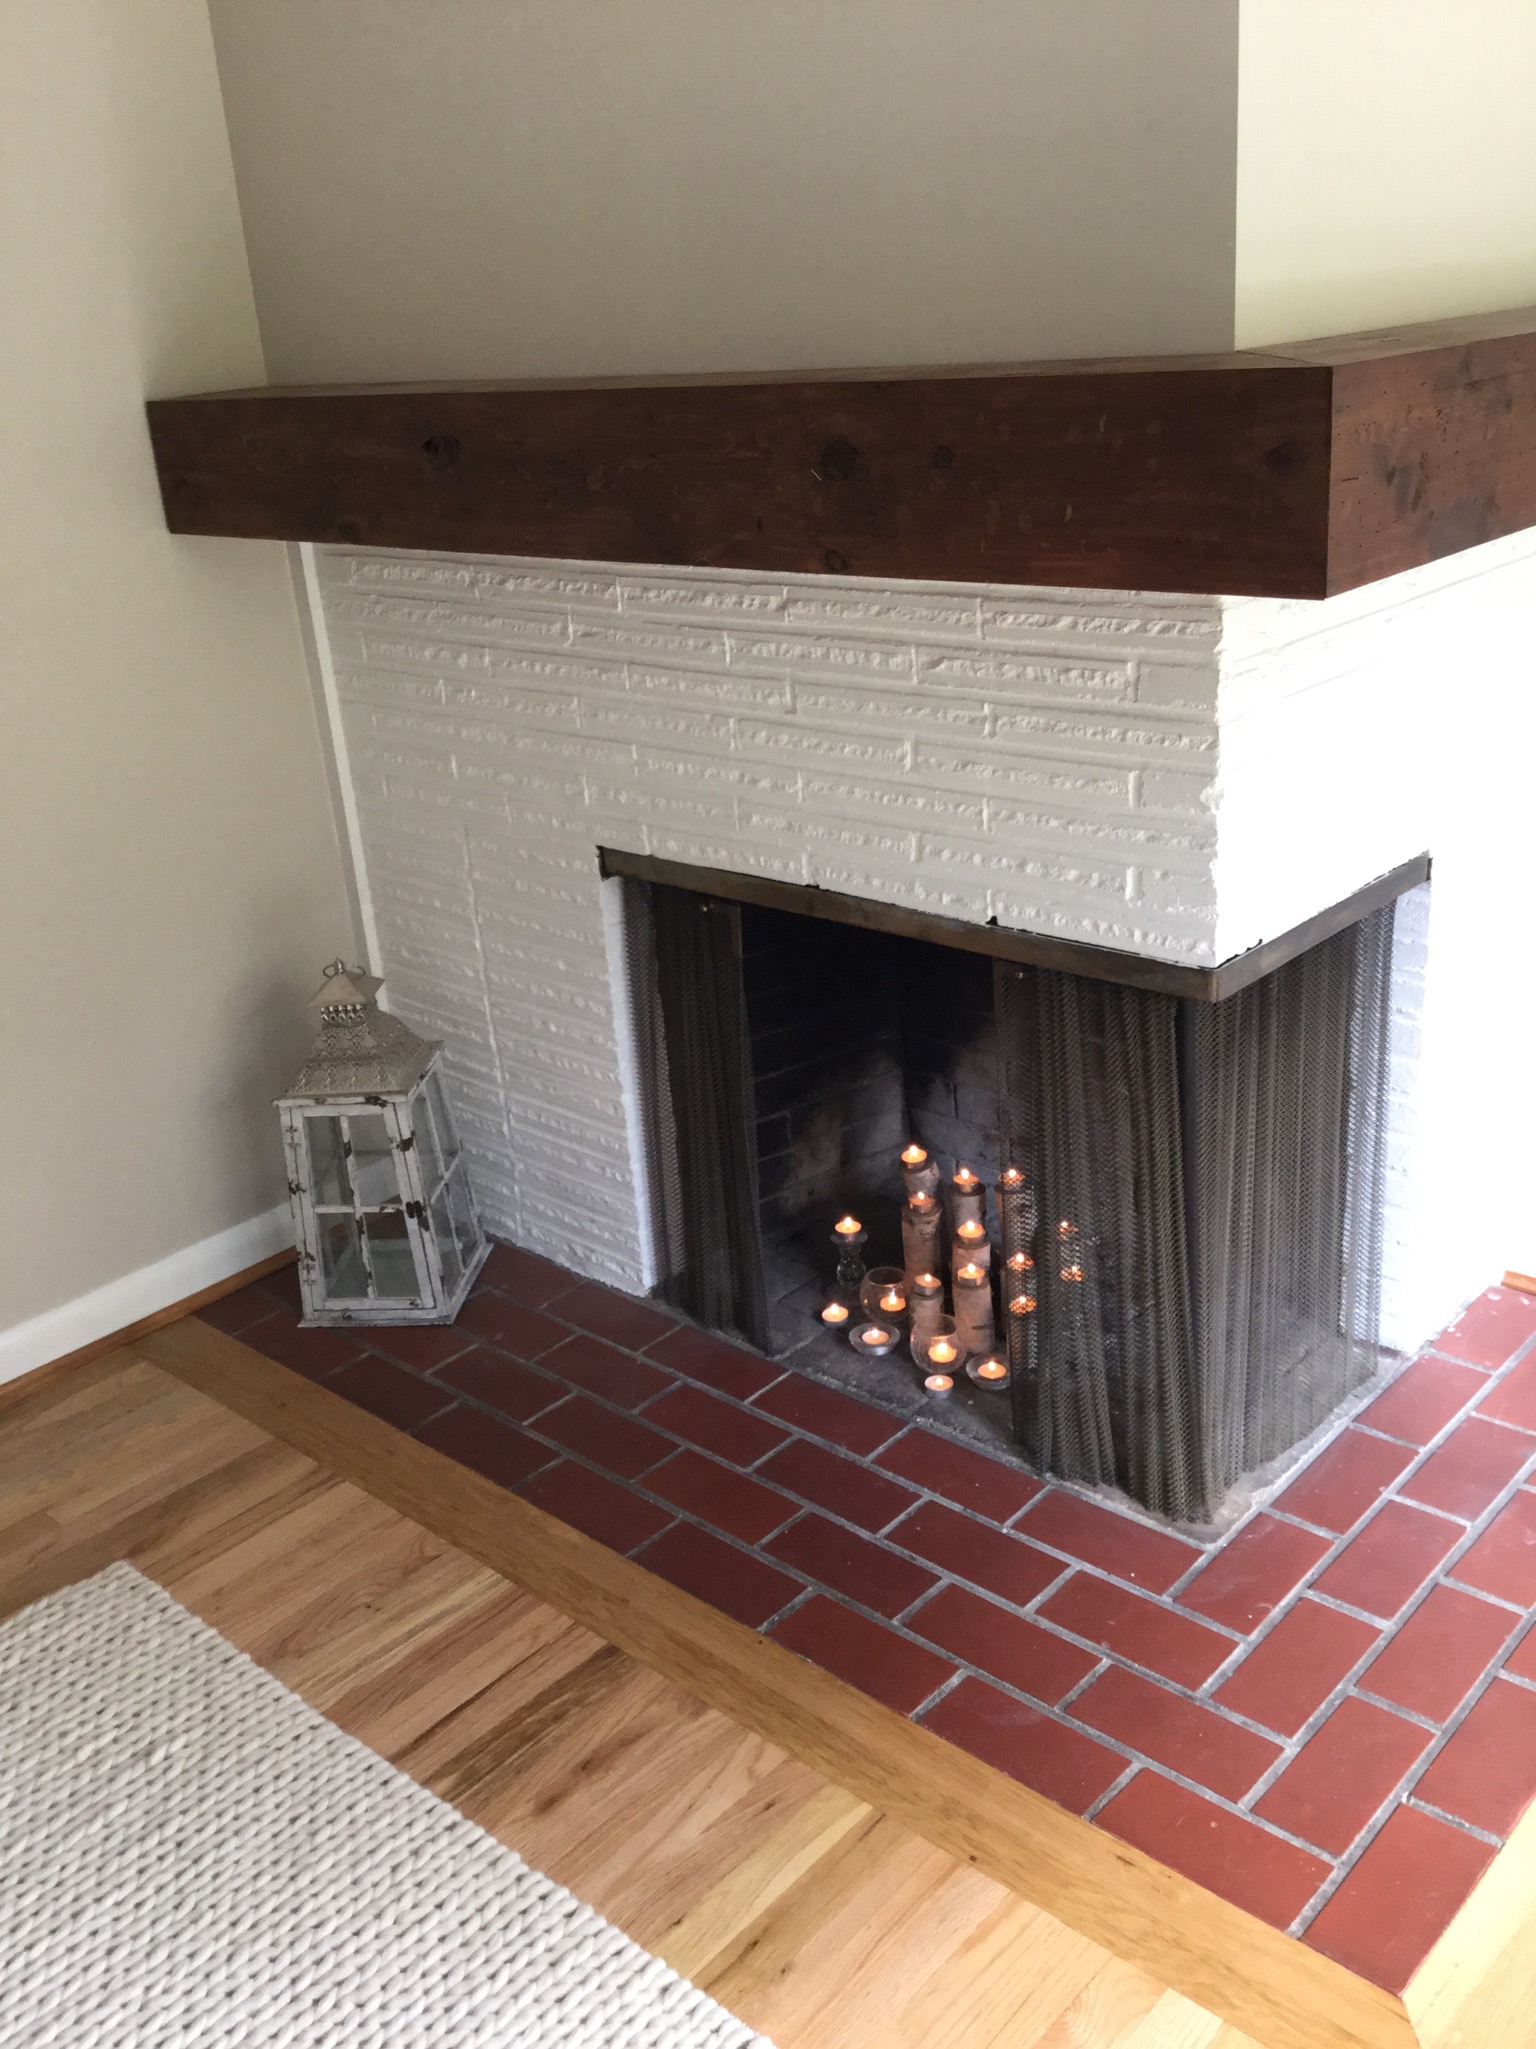 Finished fireplace mantel